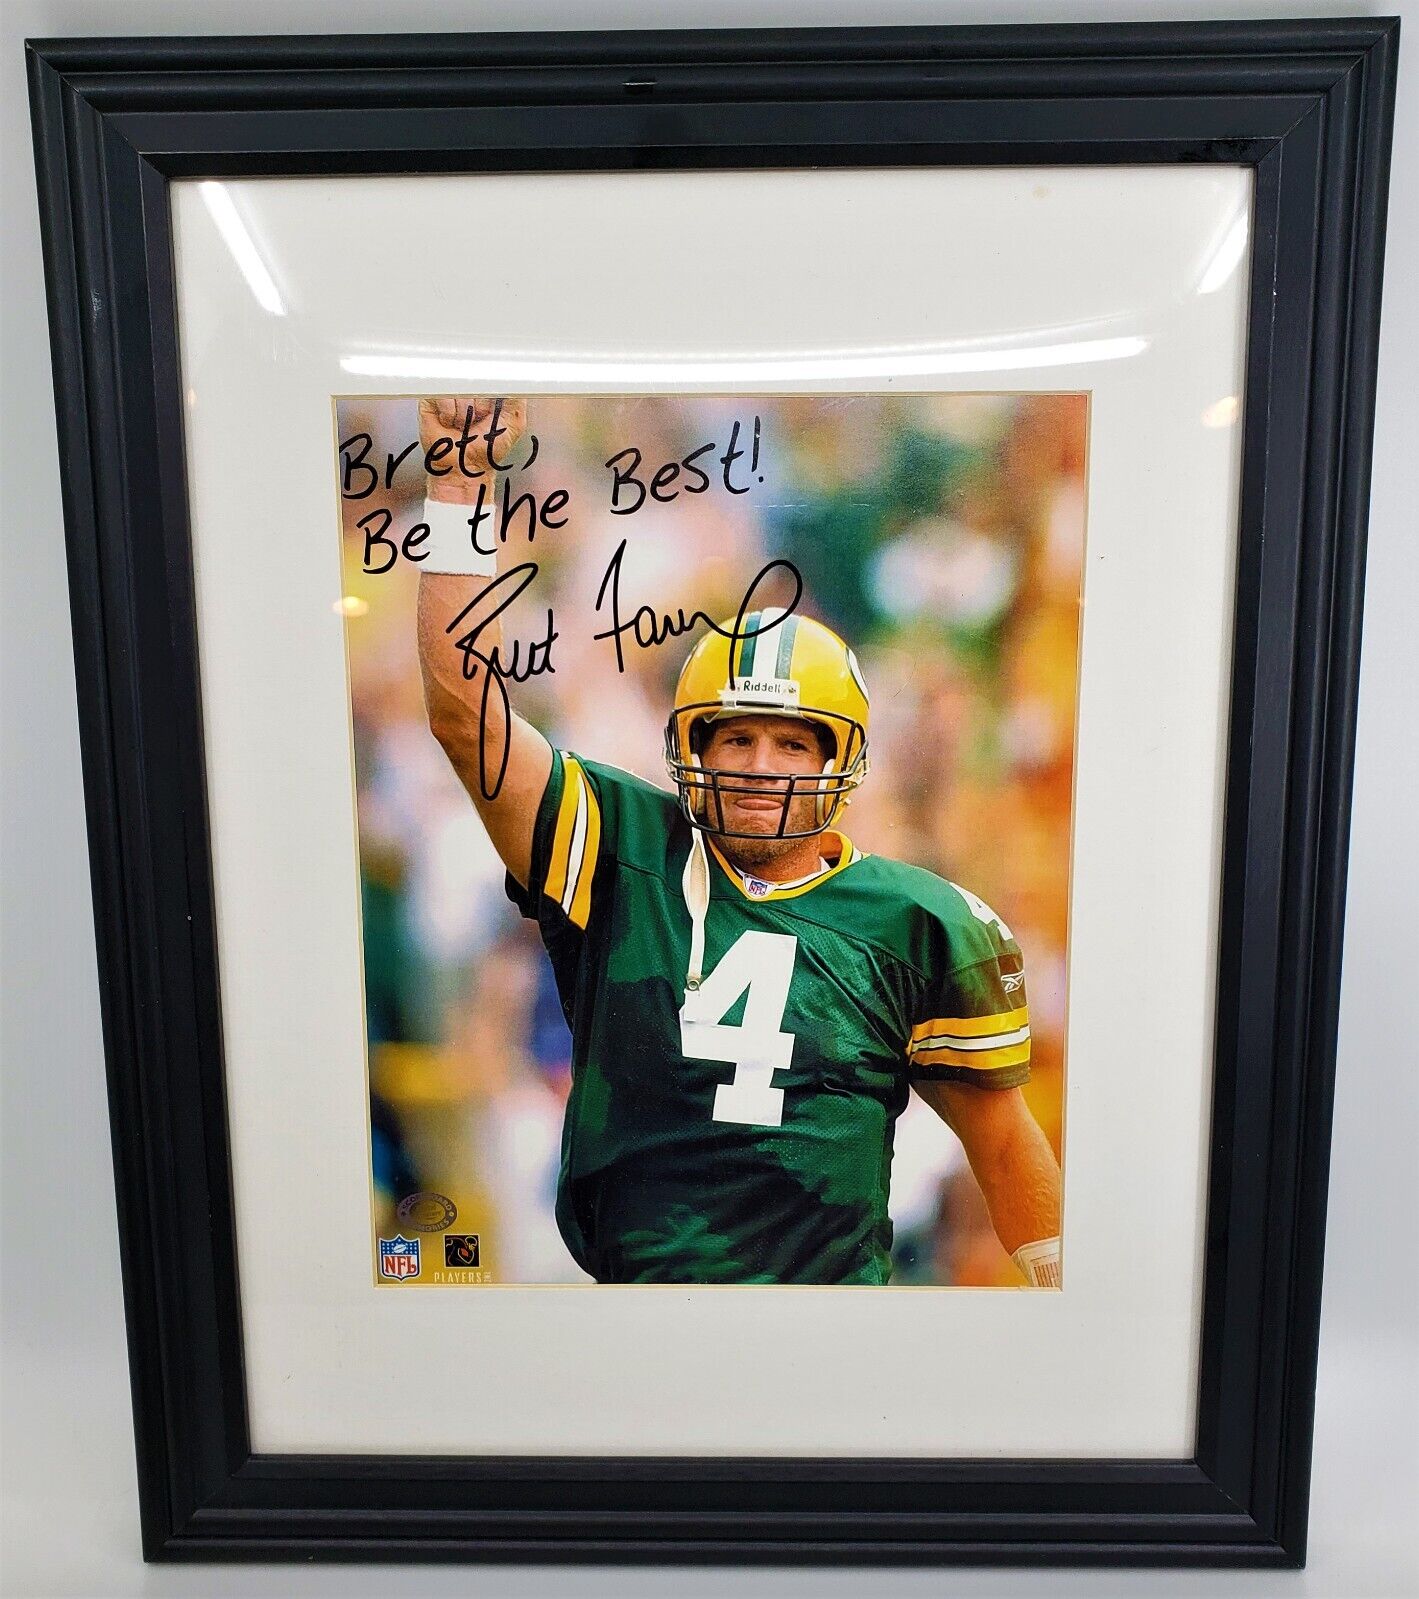 Framed - Matted - Signed & Inscribed NFL Packers Photo of Brett Favre 13\